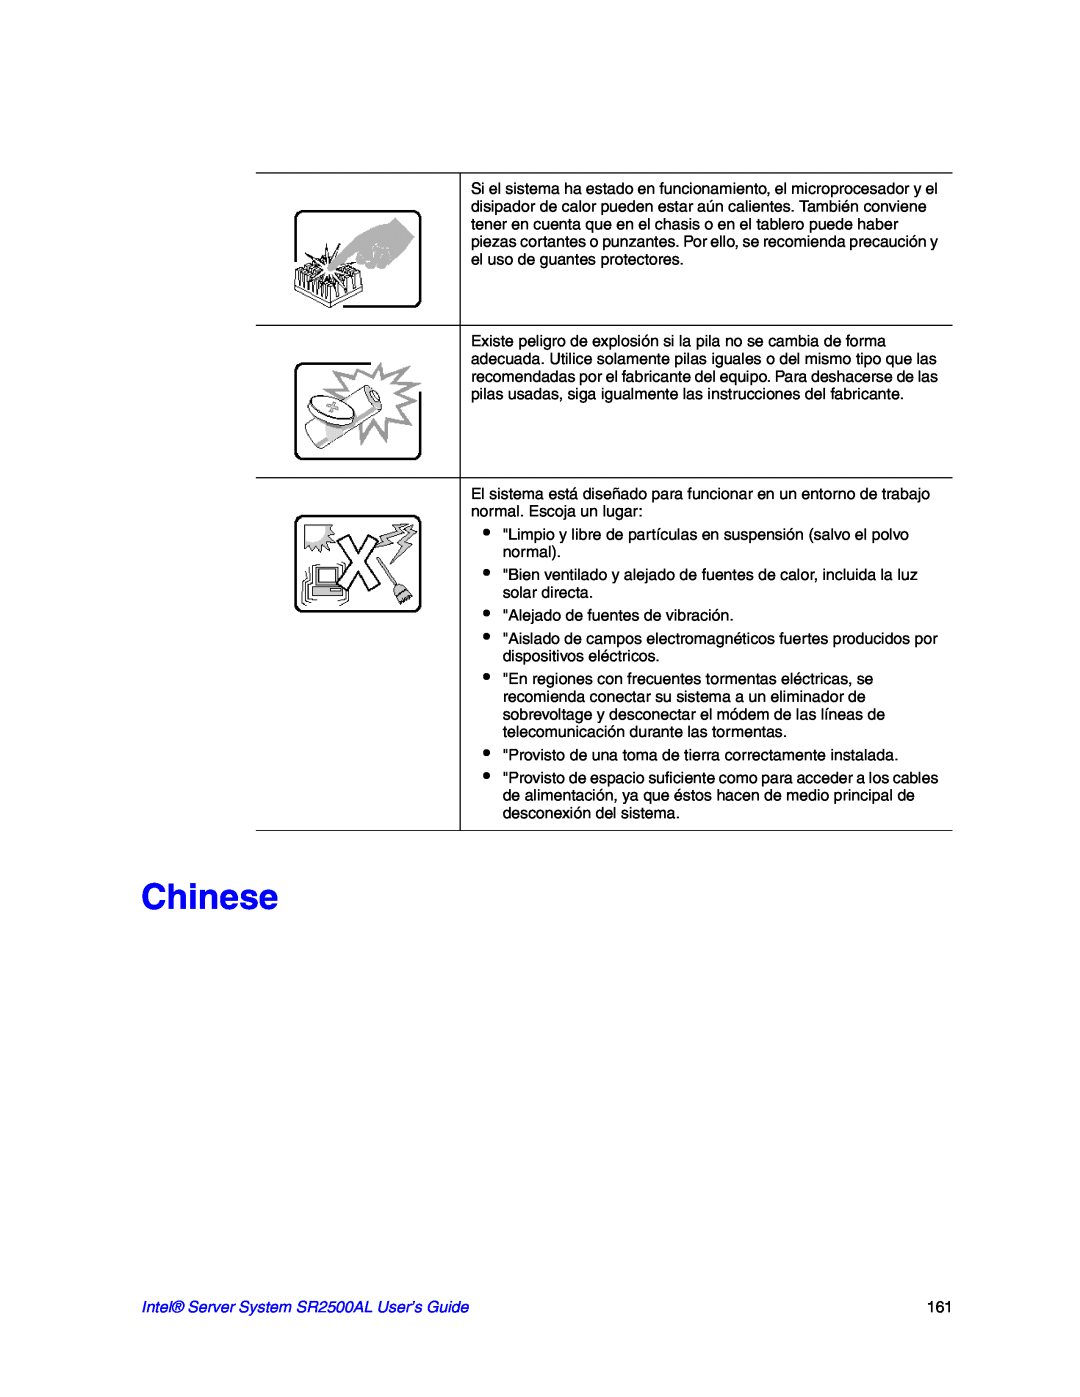 Intel manual Chinese, Intel Server System SR2500AL User’s Guide 